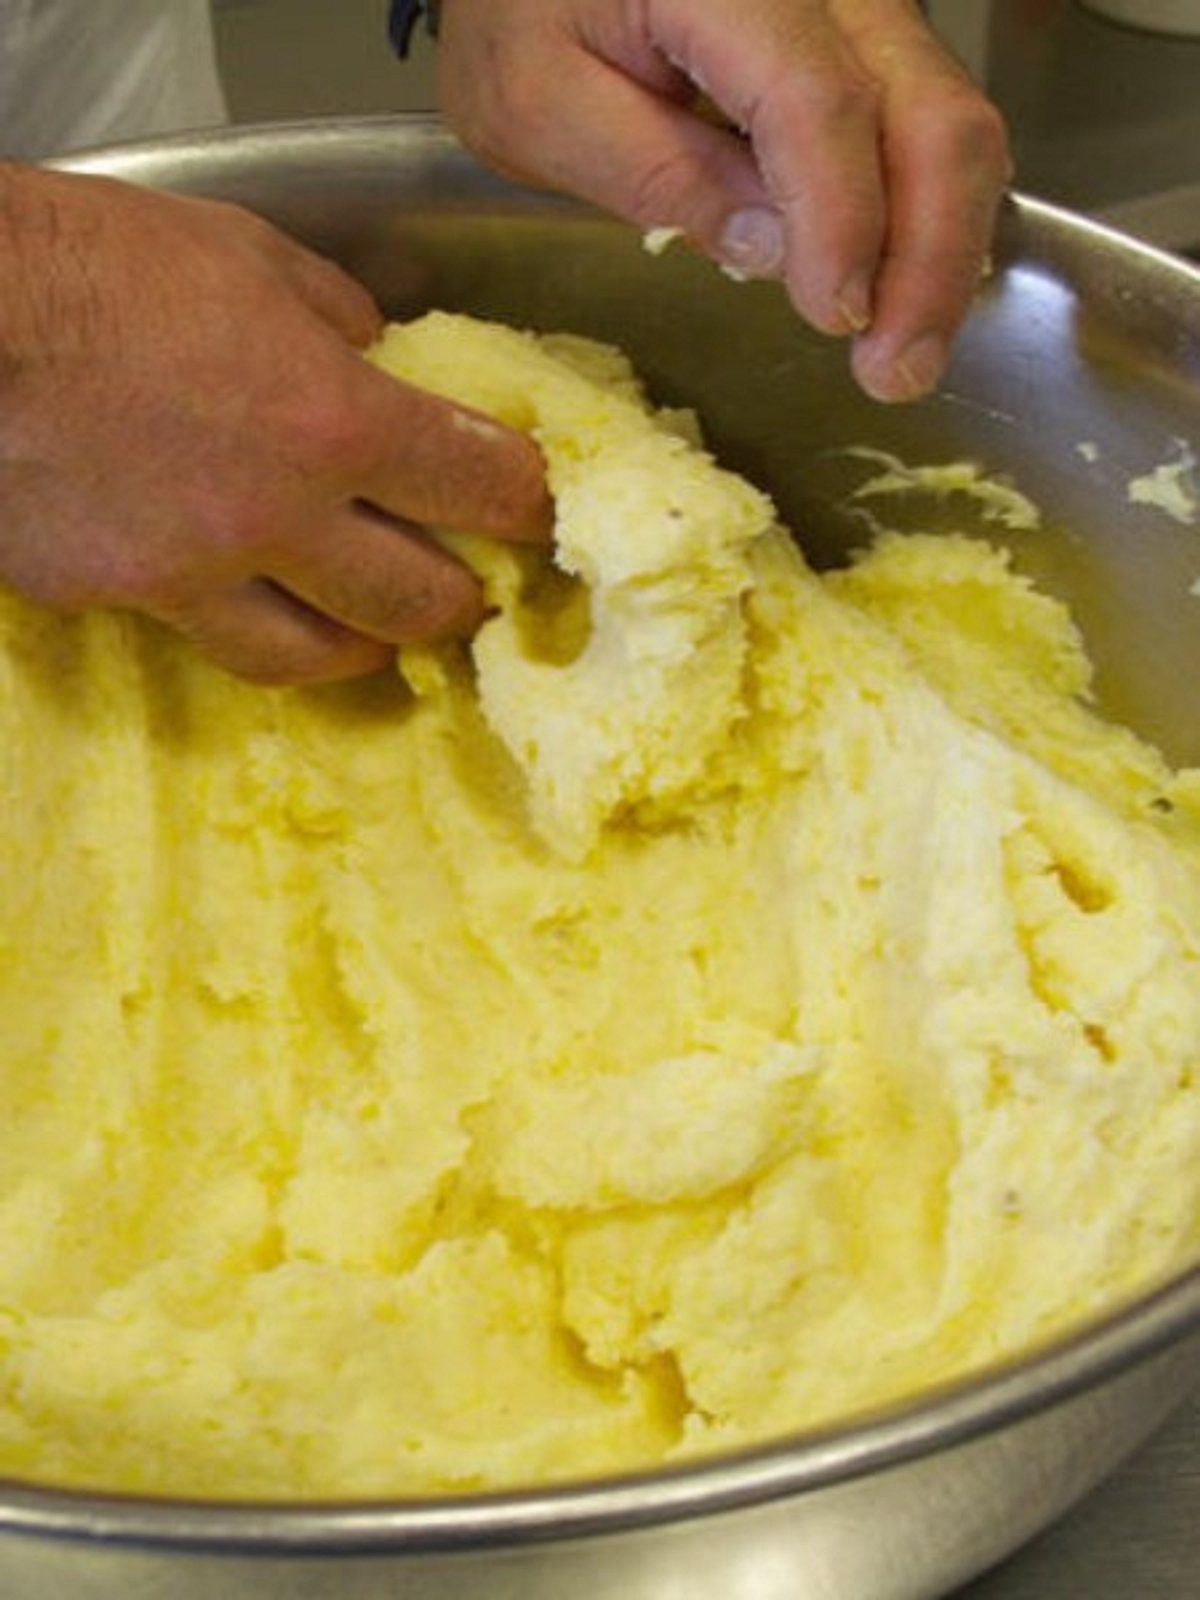 braet man kartoffeln in zu heissem fett ueber grad kann sich das krebserregende acrylamid bilden